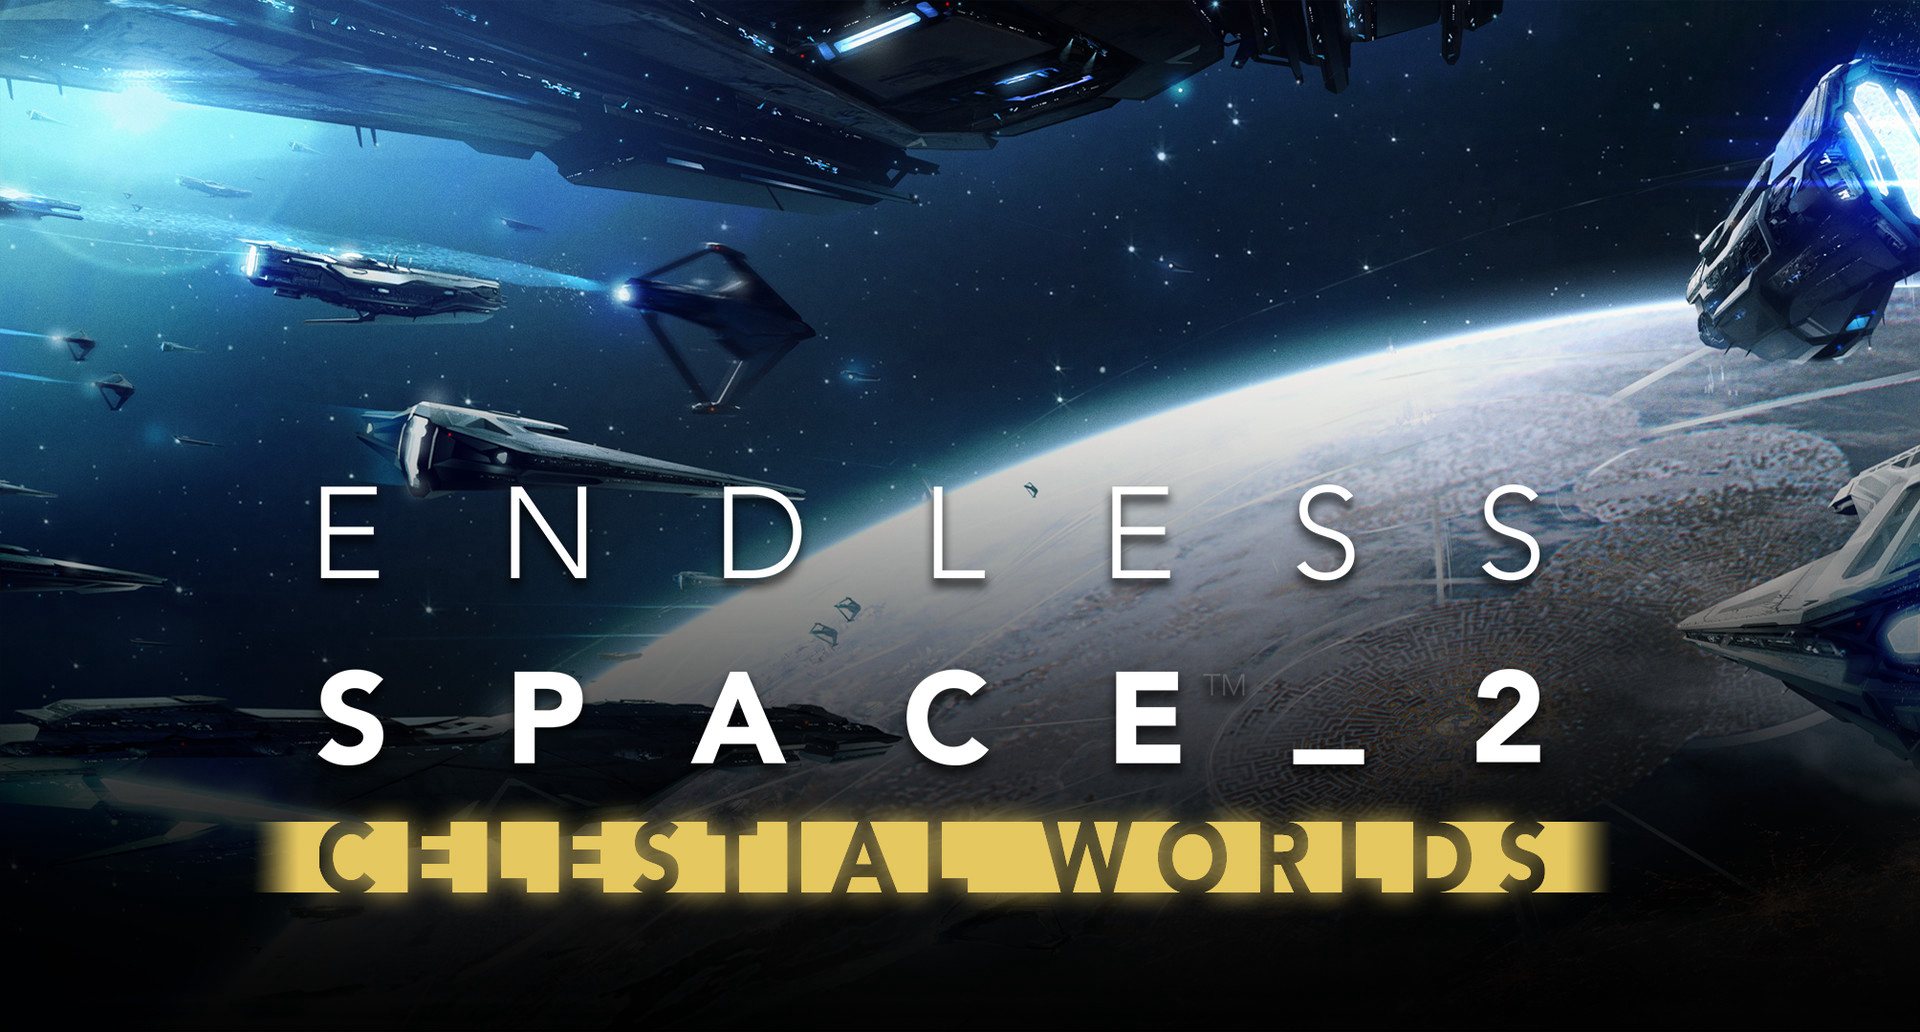 Endless Space 2 - Celestial Worlds DLC EU Steam CD Key 1.54 $